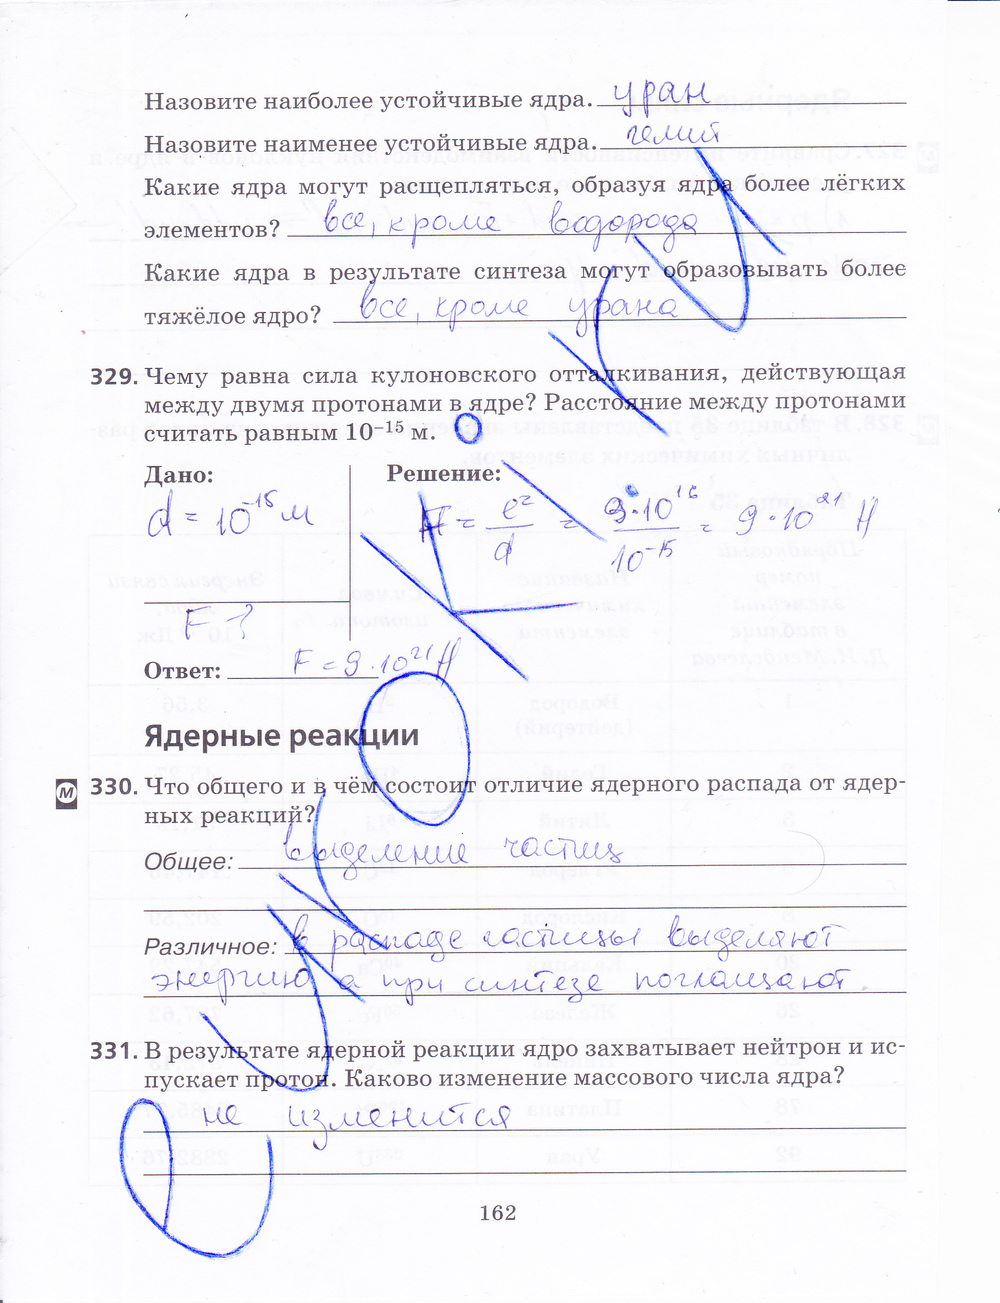 ГДЗ Физика Пурышева 9 класс Рабочая тетрадь Номер стр. 162